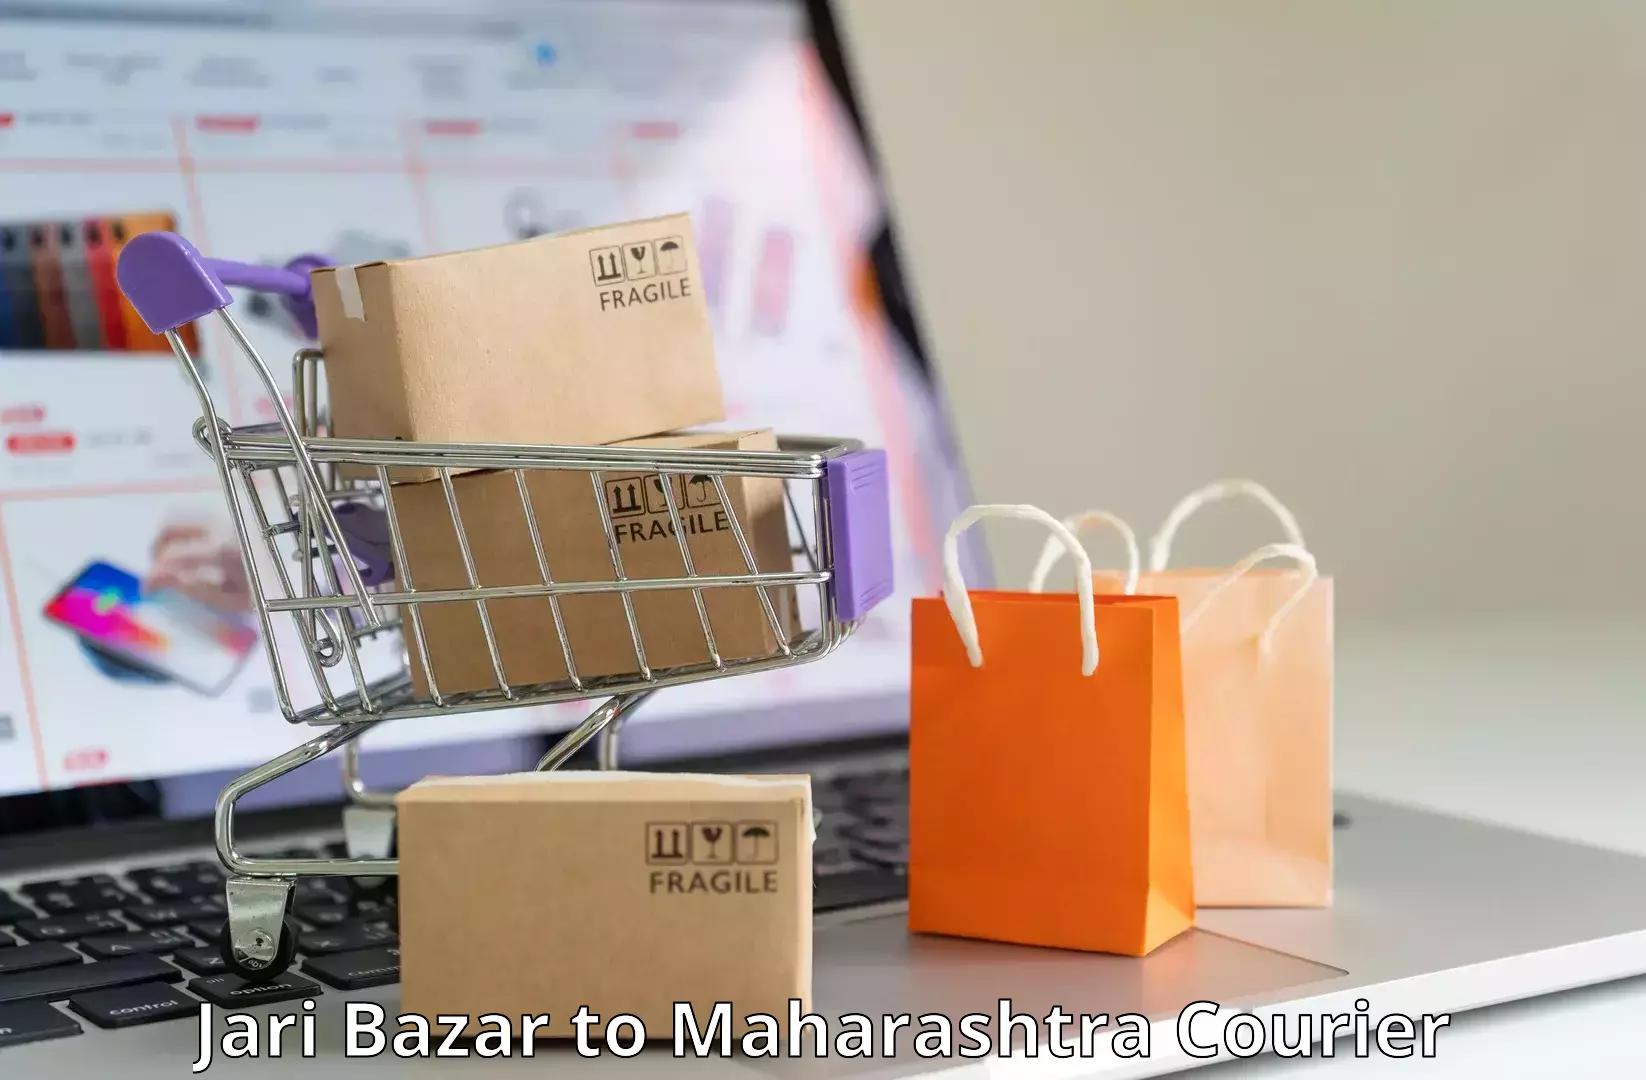 Efficient parcel delivery in Jari Bazar to Chembur